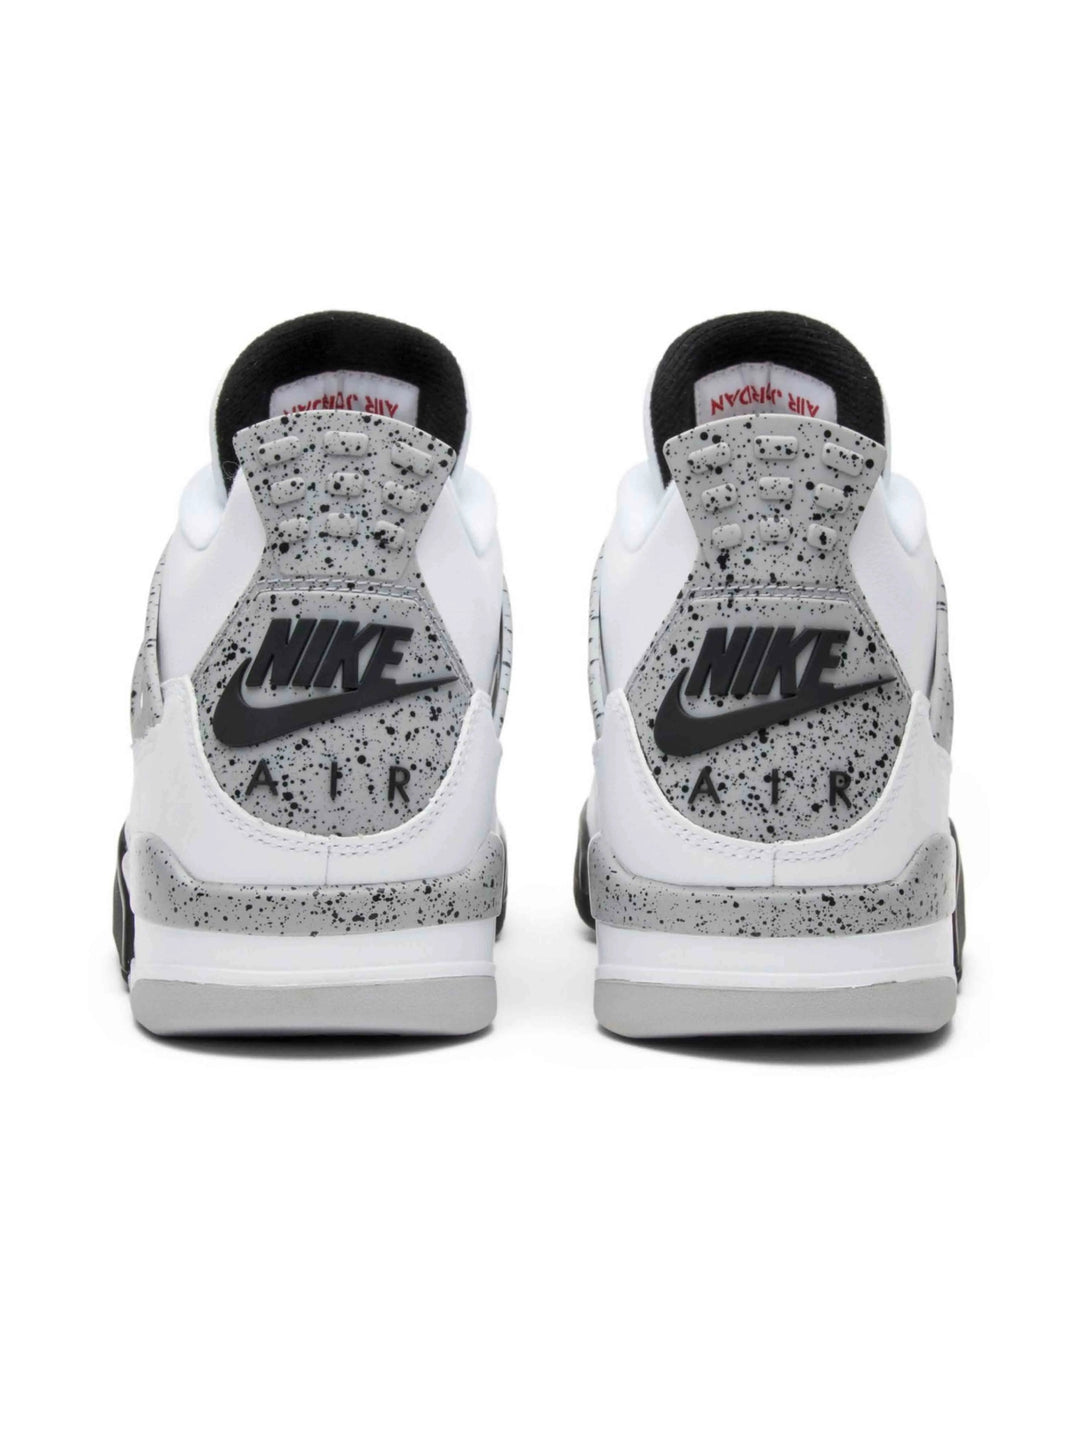 Nike Air Jordan 4 Retro White Cement [2016] Prior